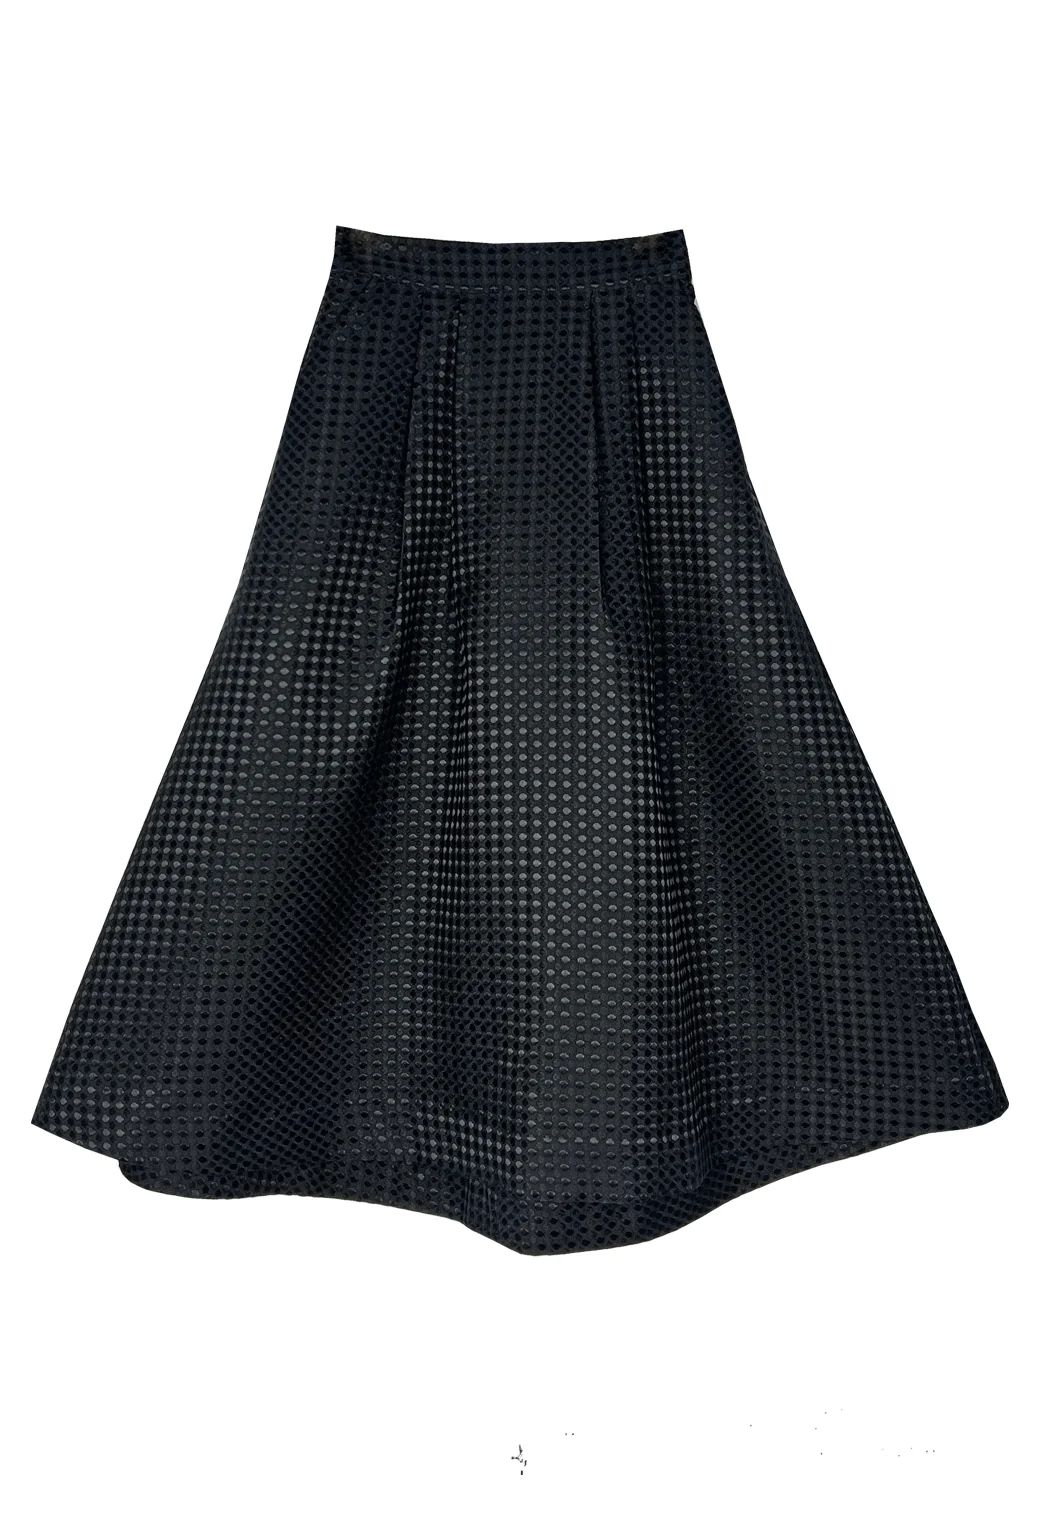 BURU X Mary Orton Flat Front Everyday Skirt - Black Dot | Shop BURU